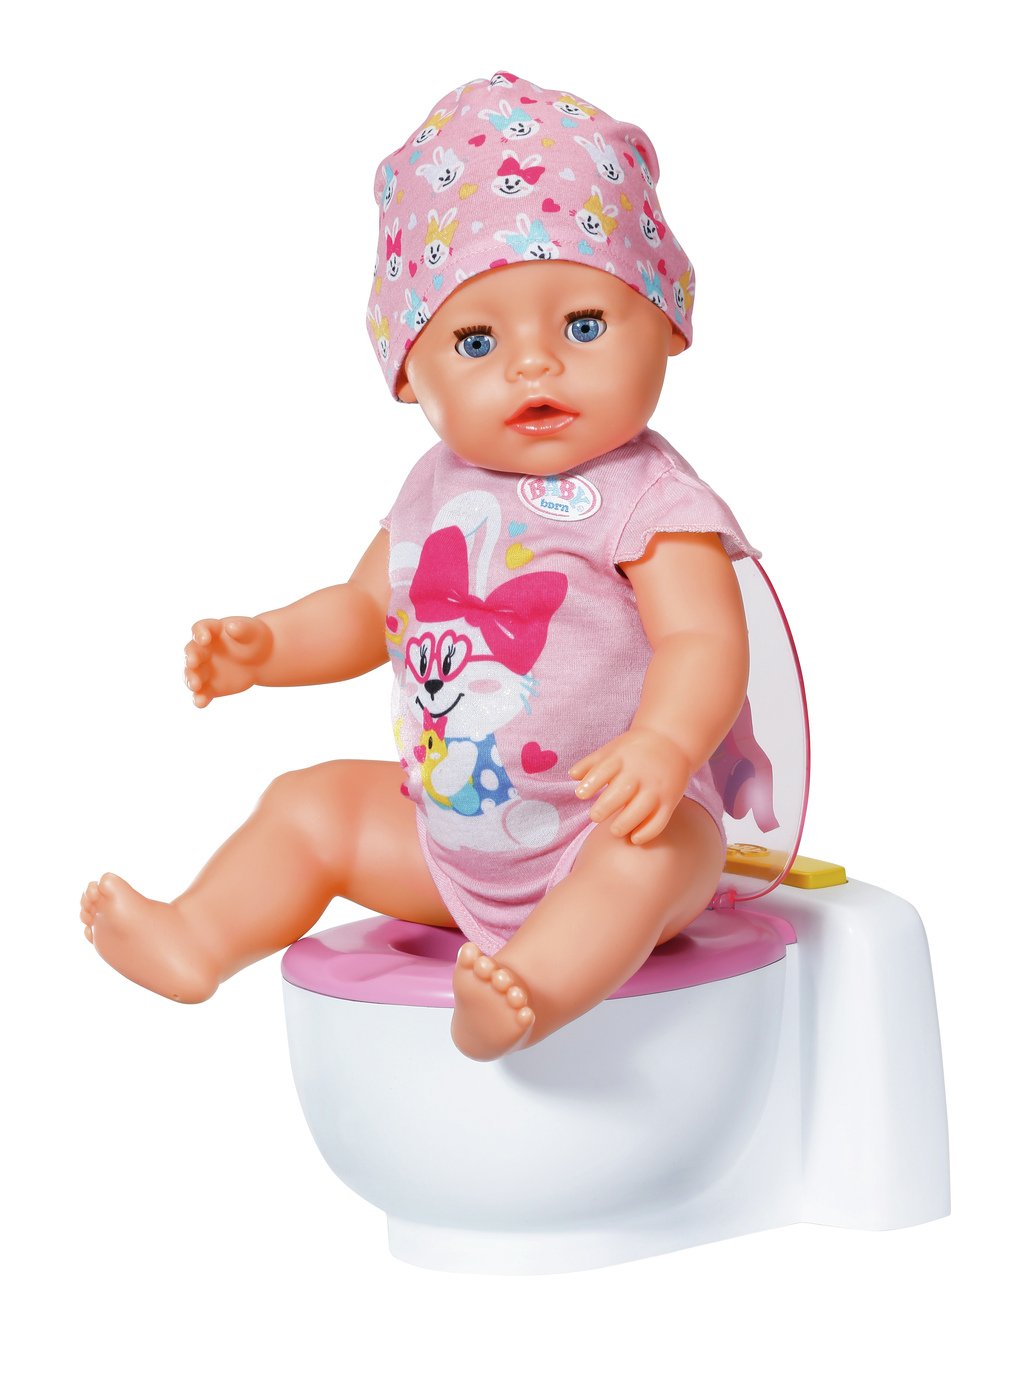 BABY born Poo Poo Toilet Review